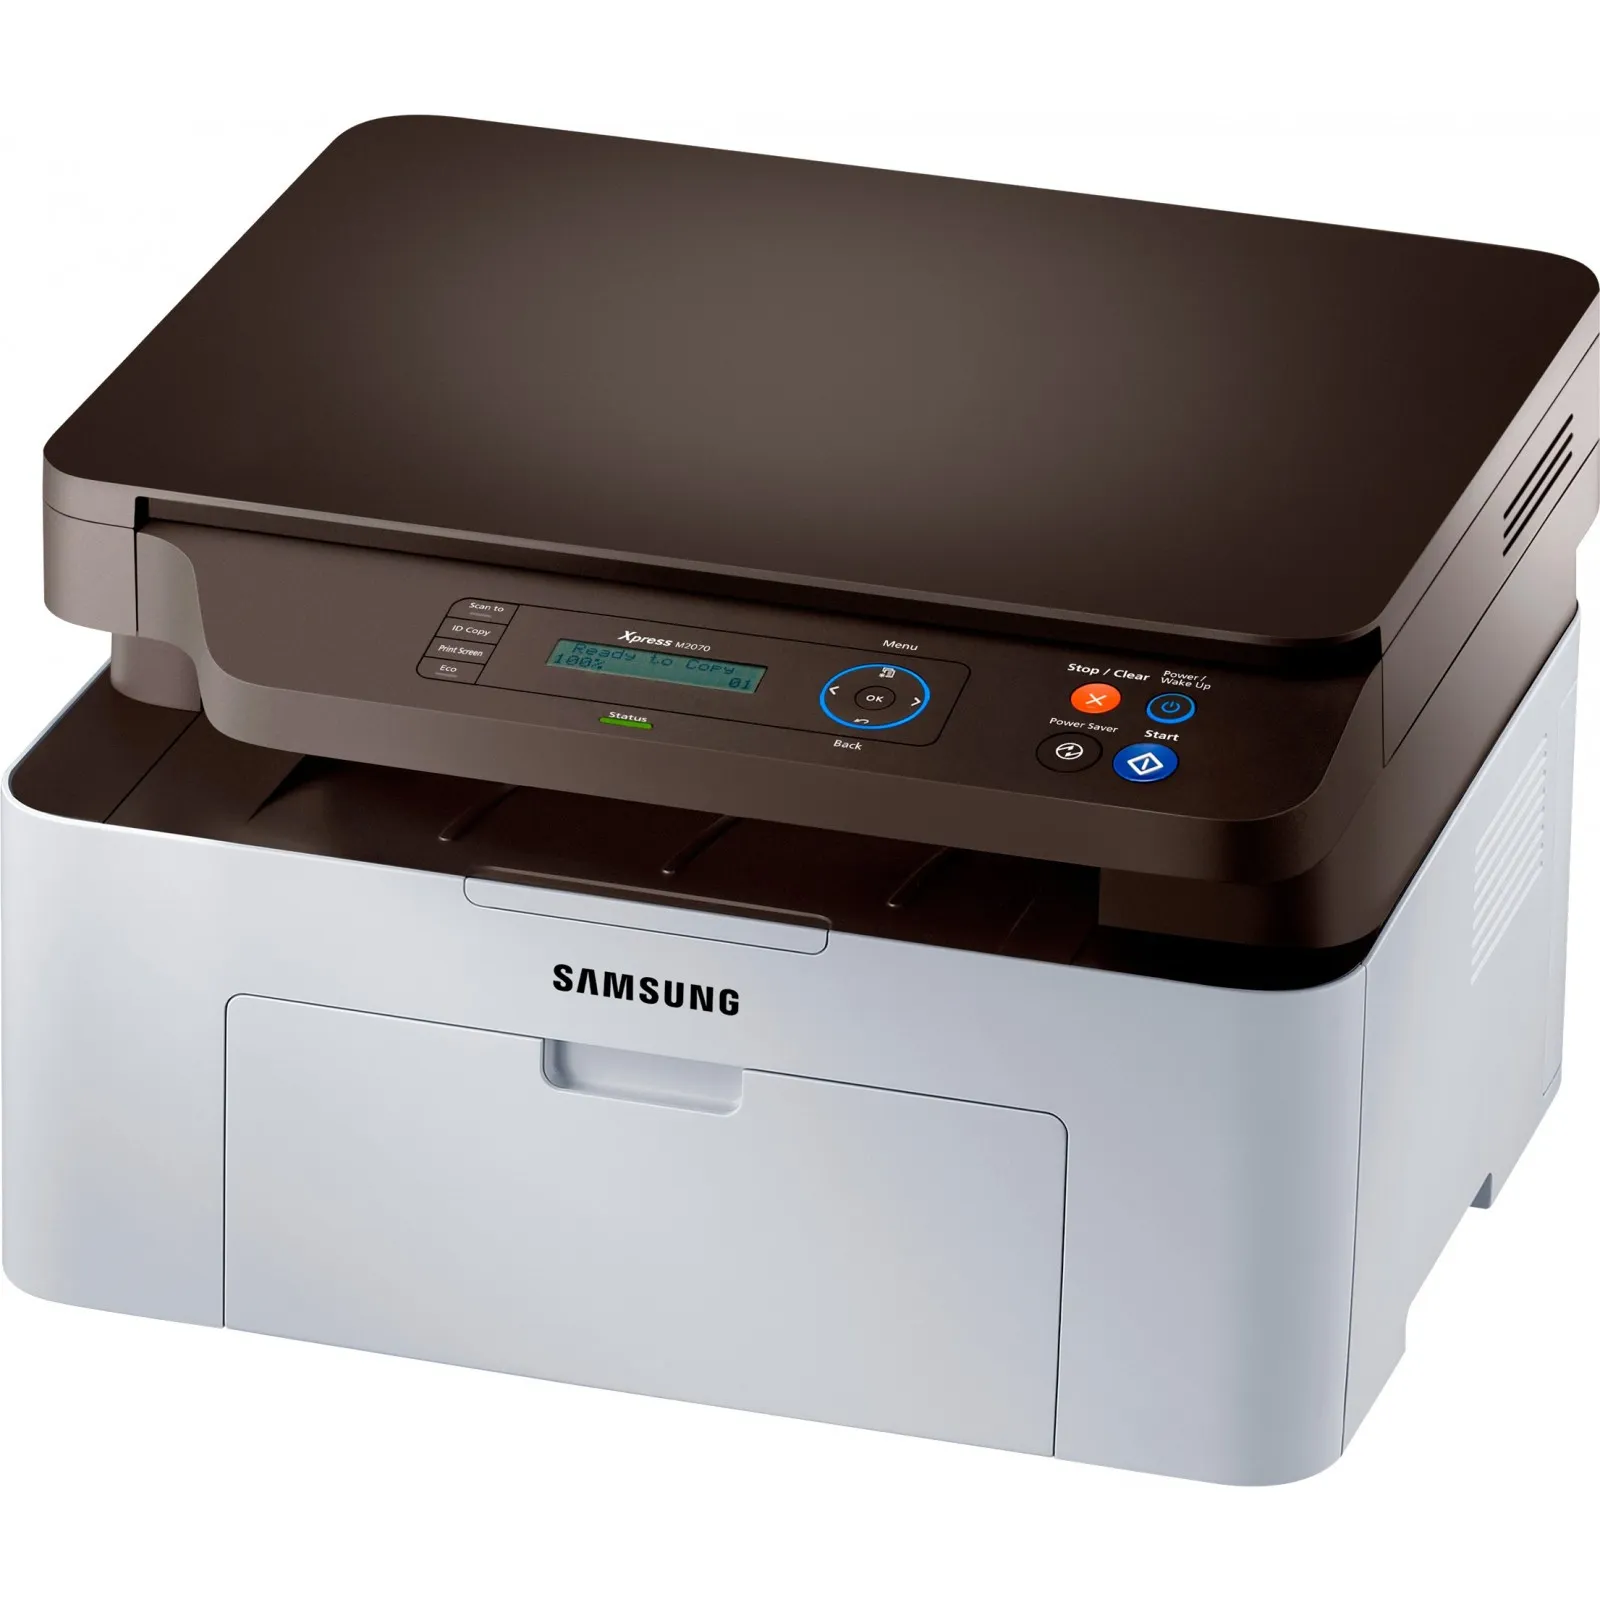 МФУ Samsung SL-M2070 (A4, 20 стр / мин, 128Mb, лазерное МФУ, USB 2.0)#7